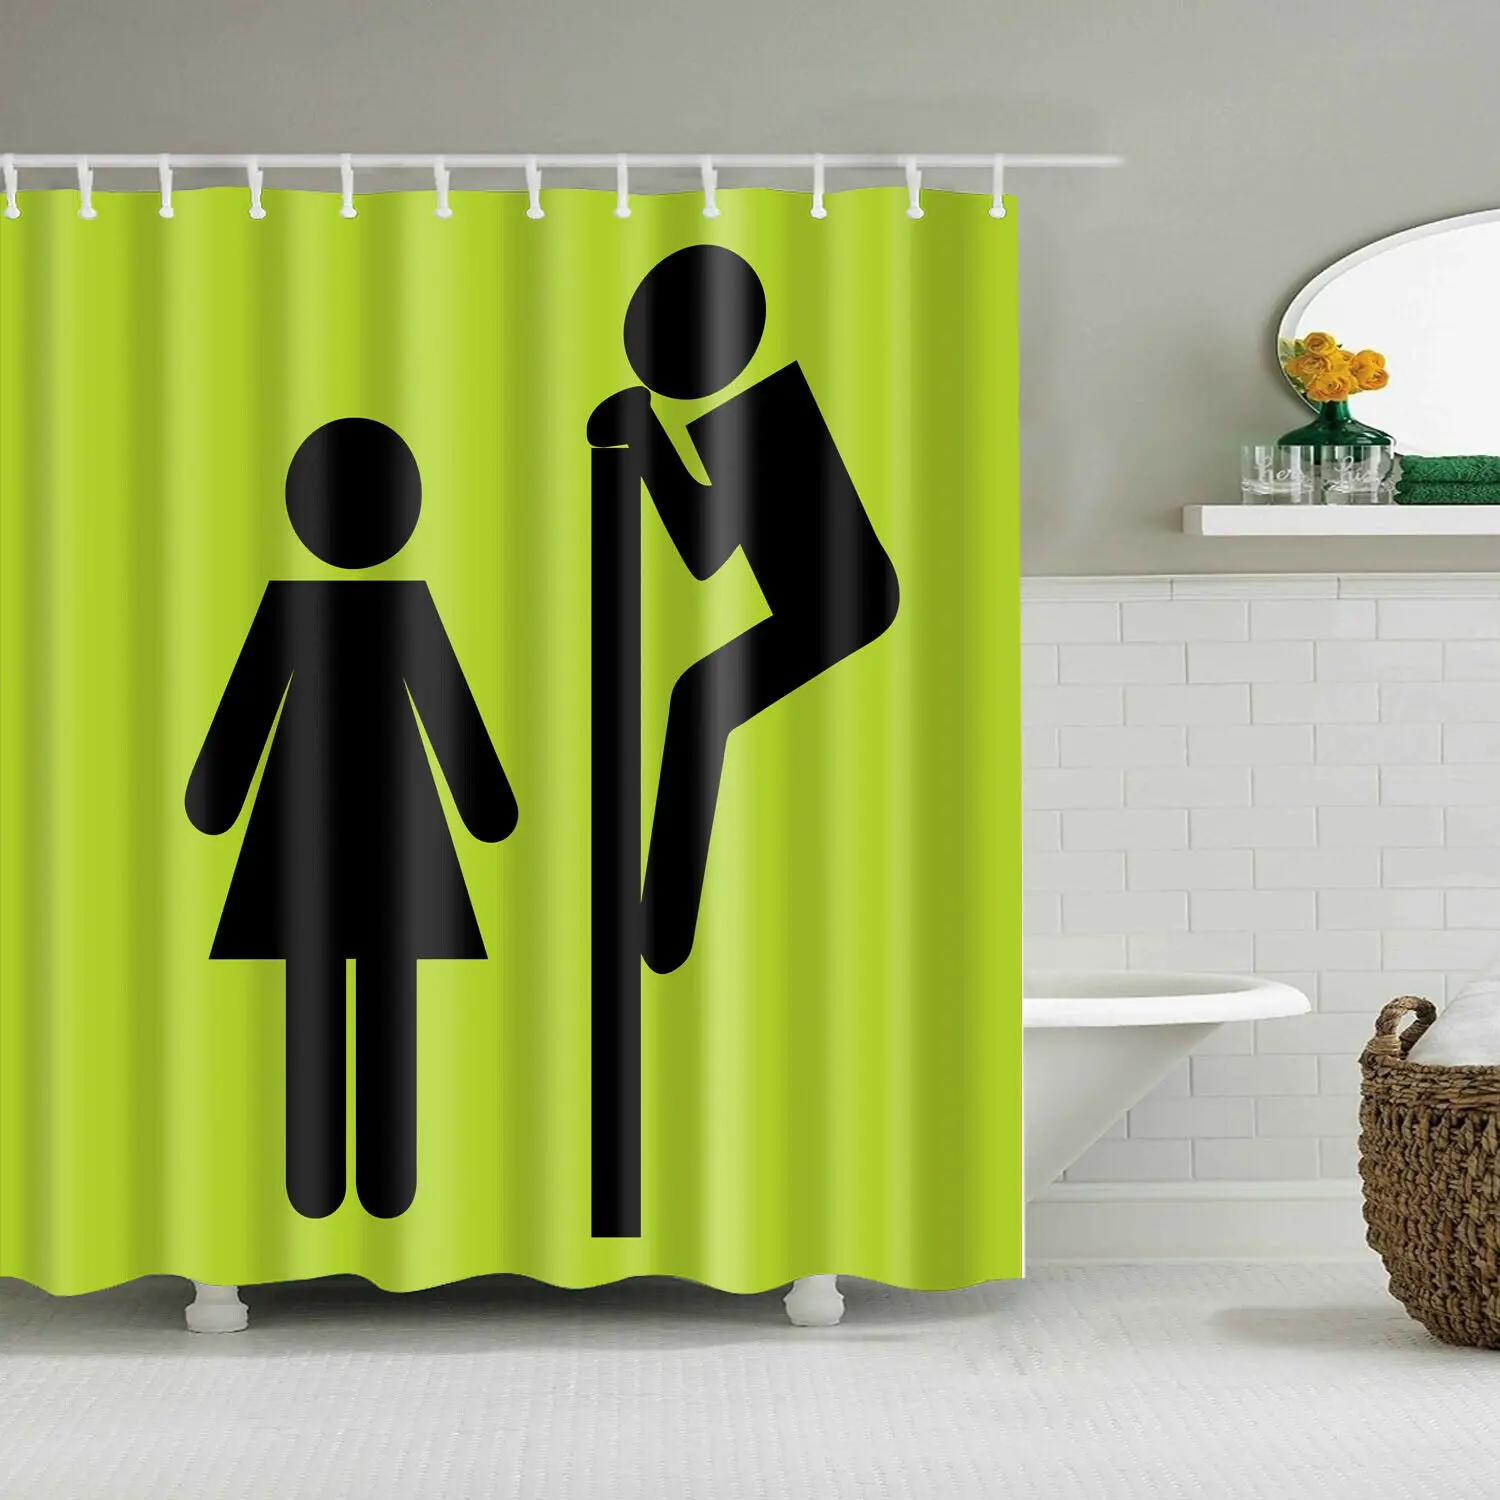 Cartoon Funny Stick Figure Shower Curtain Simple Style Bathroom Decor & 12hooks